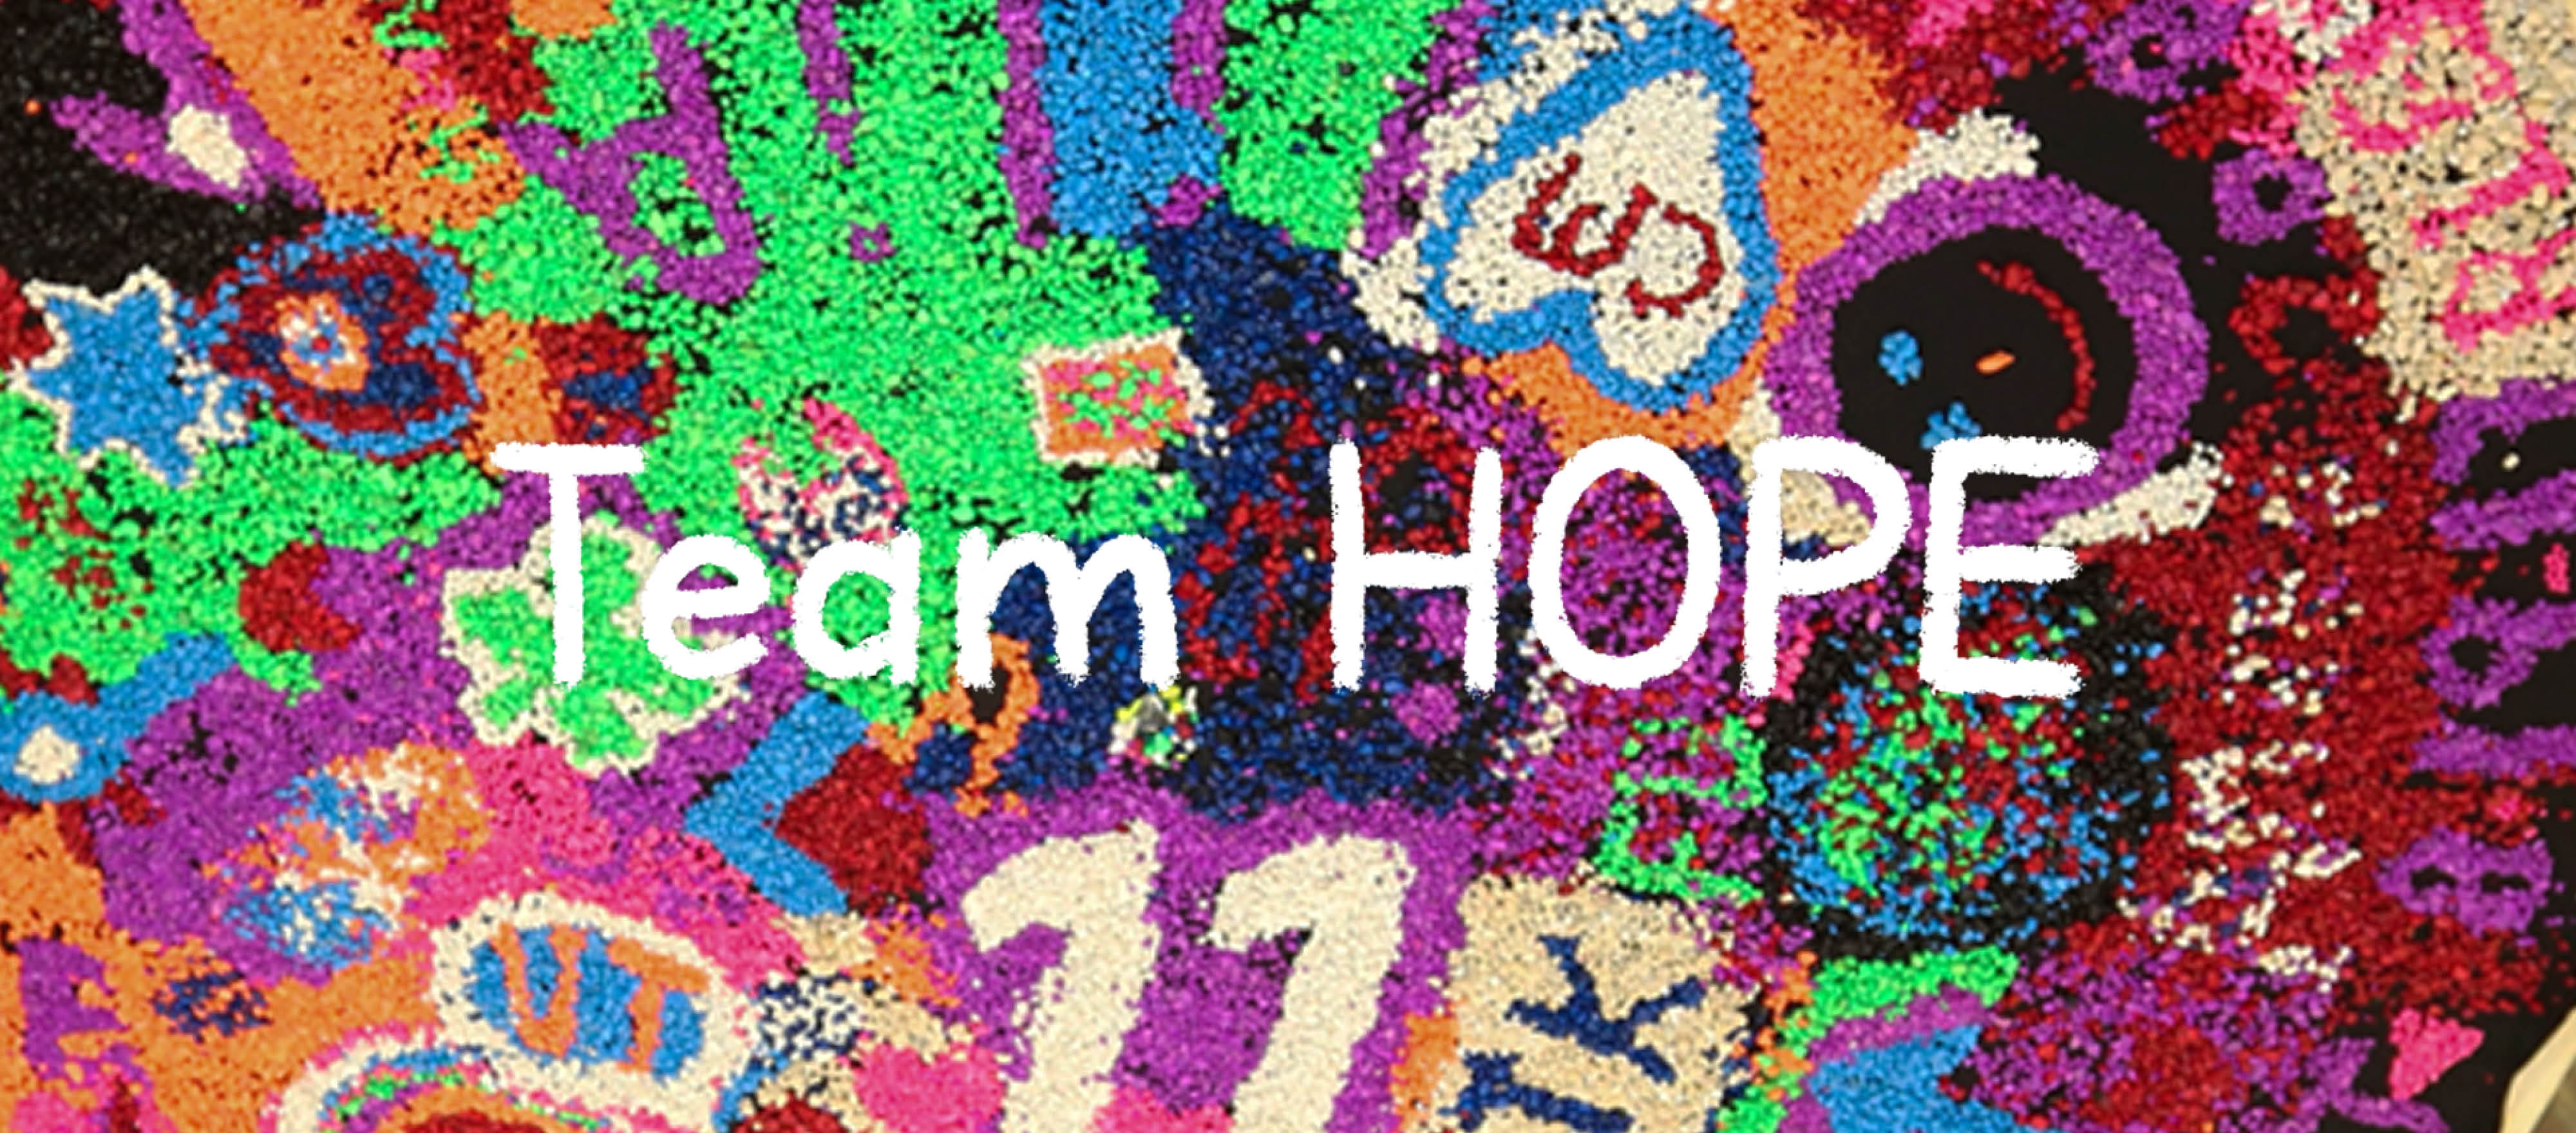 Team HOPE spelled in sand